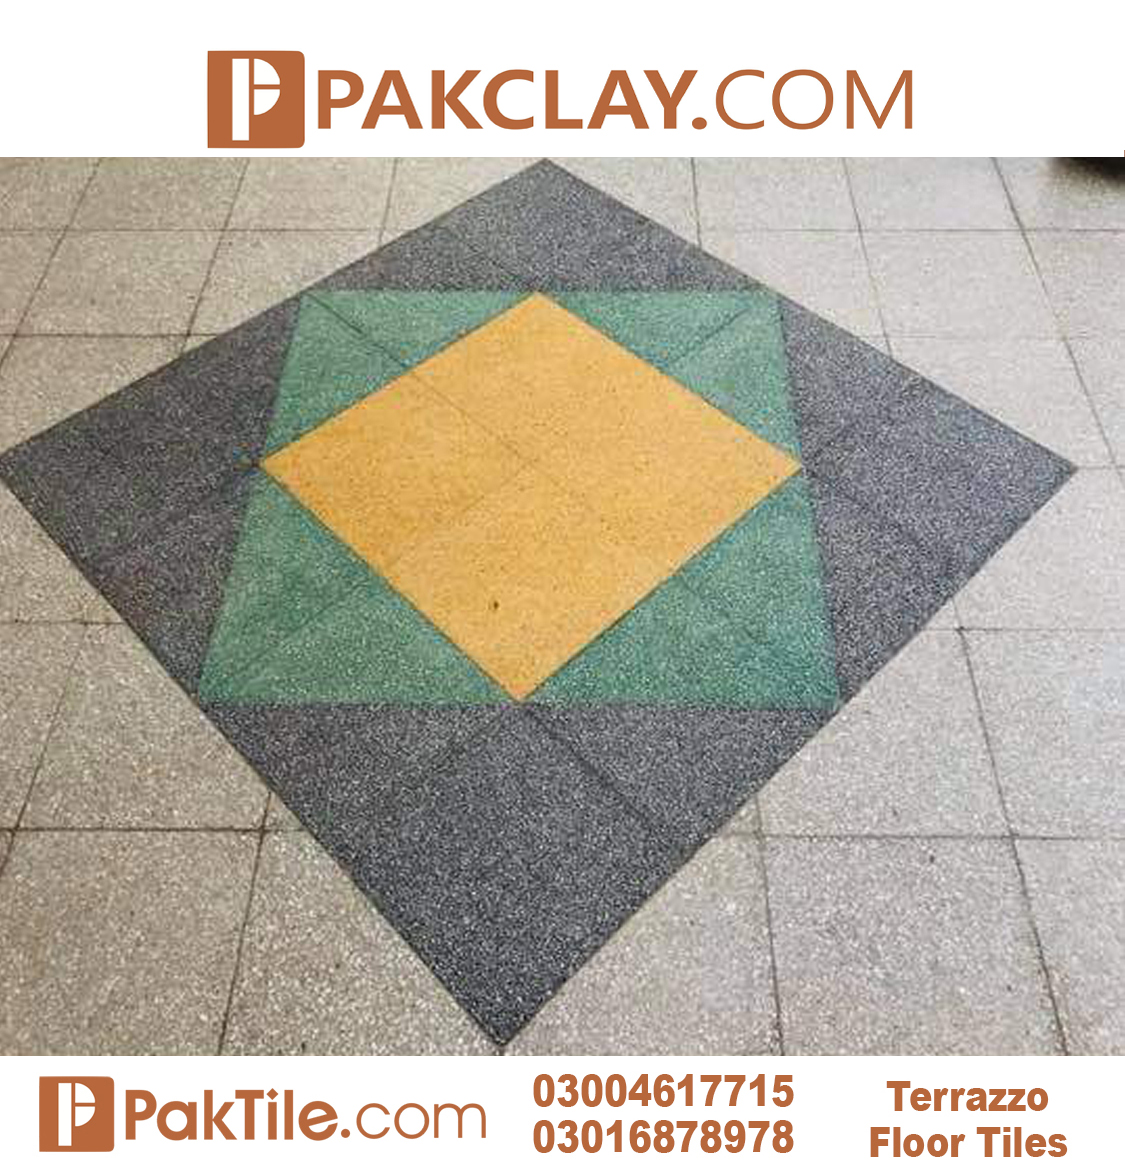 02 terrazzo flooring tiles price in Islamabad